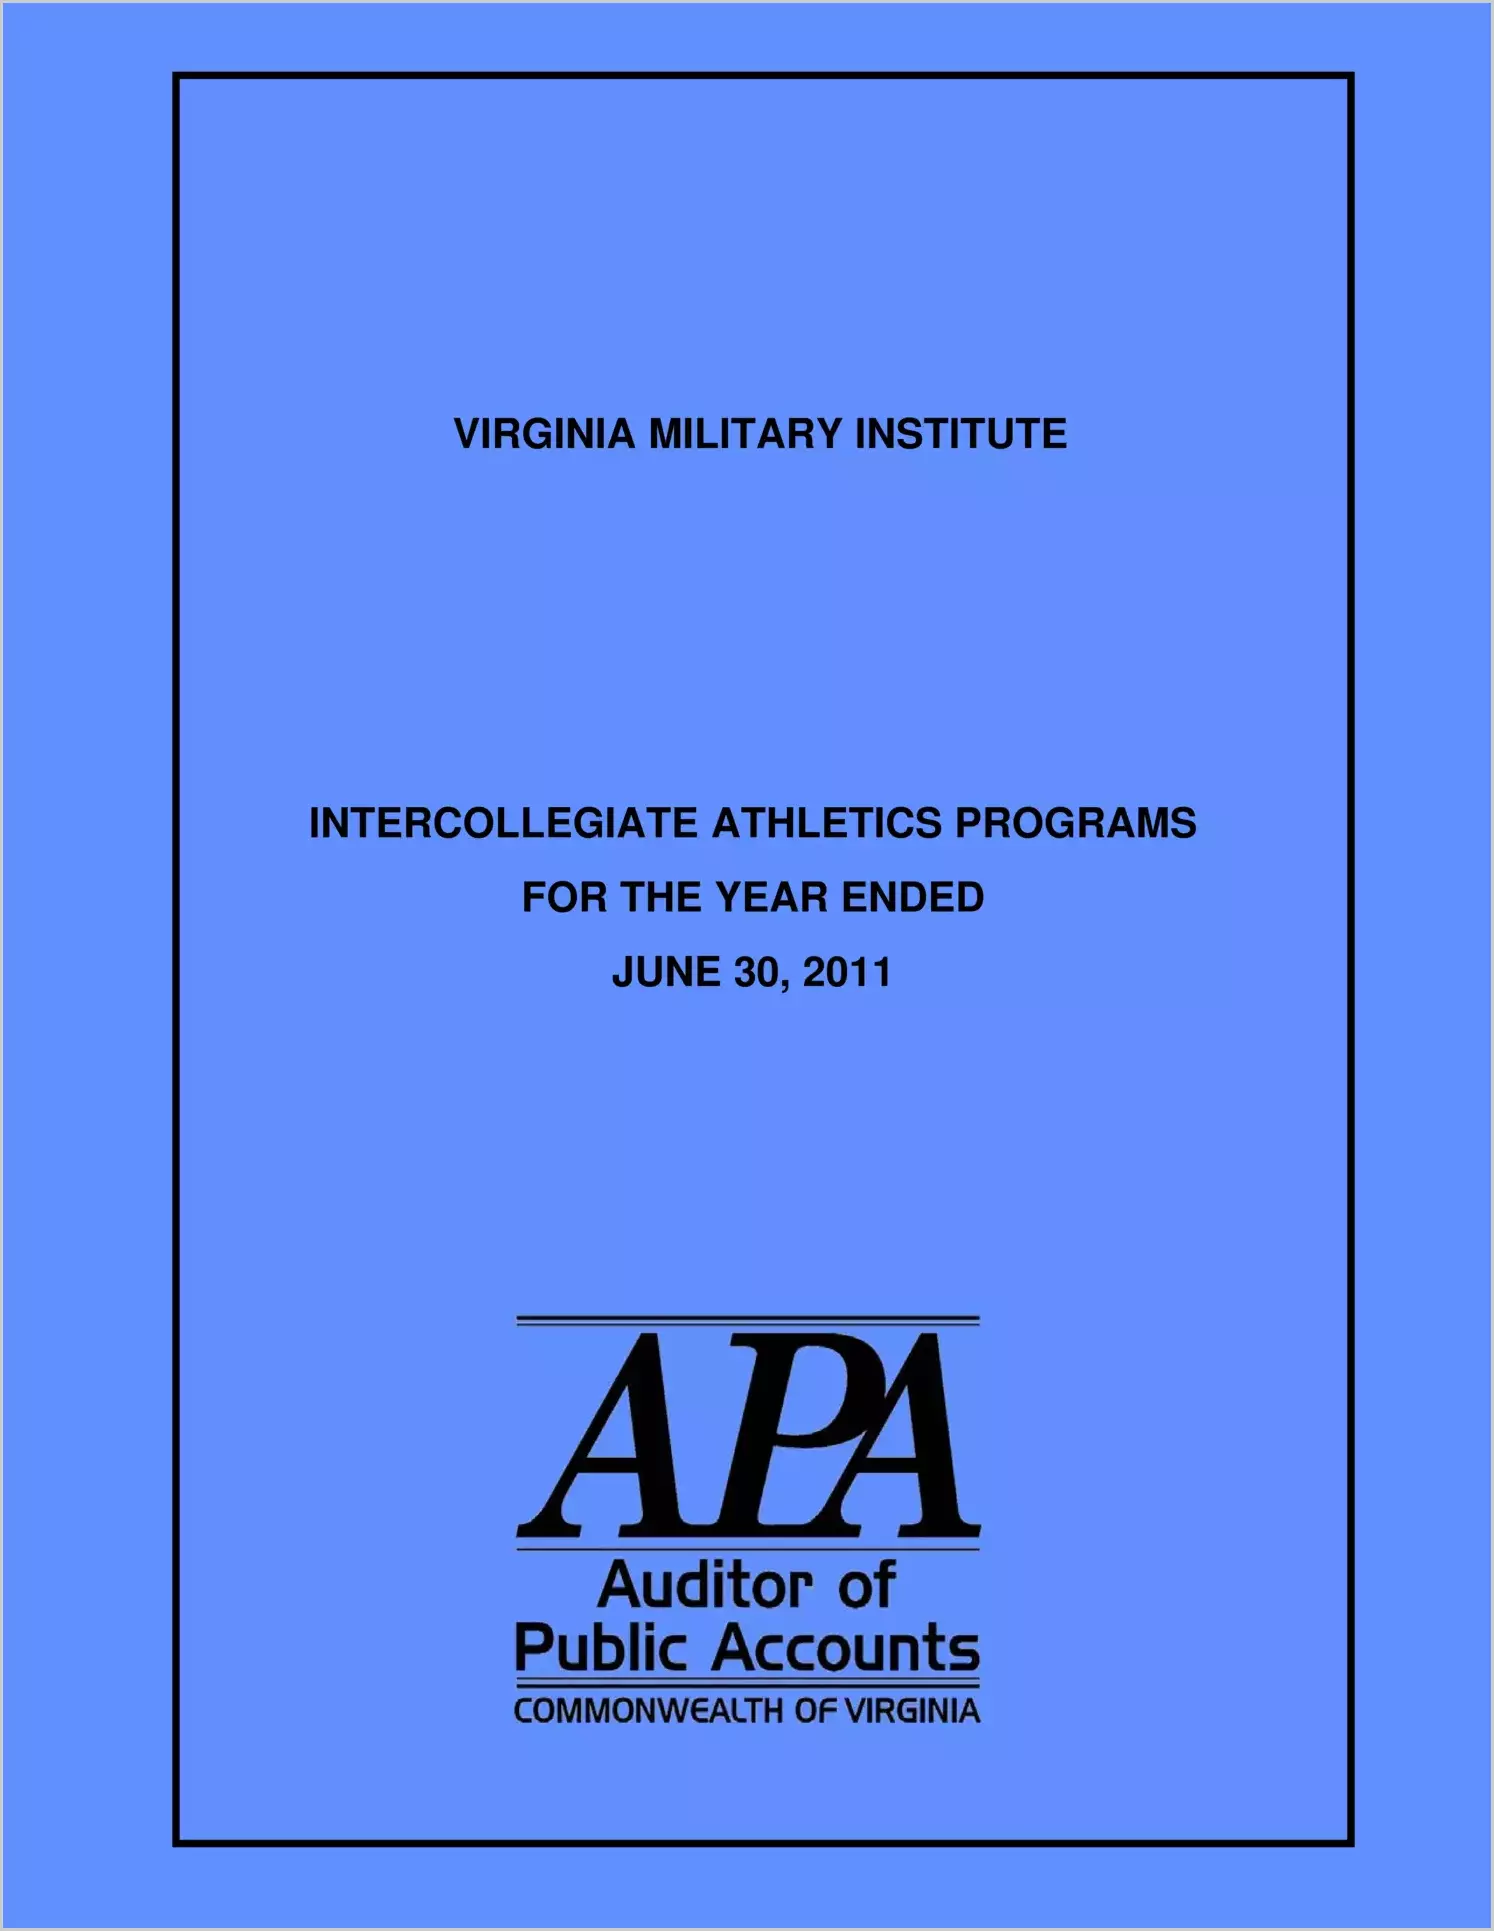 Virginia Military Institute Intercollegiate Athletics Programs for the year ended June 30, 2011